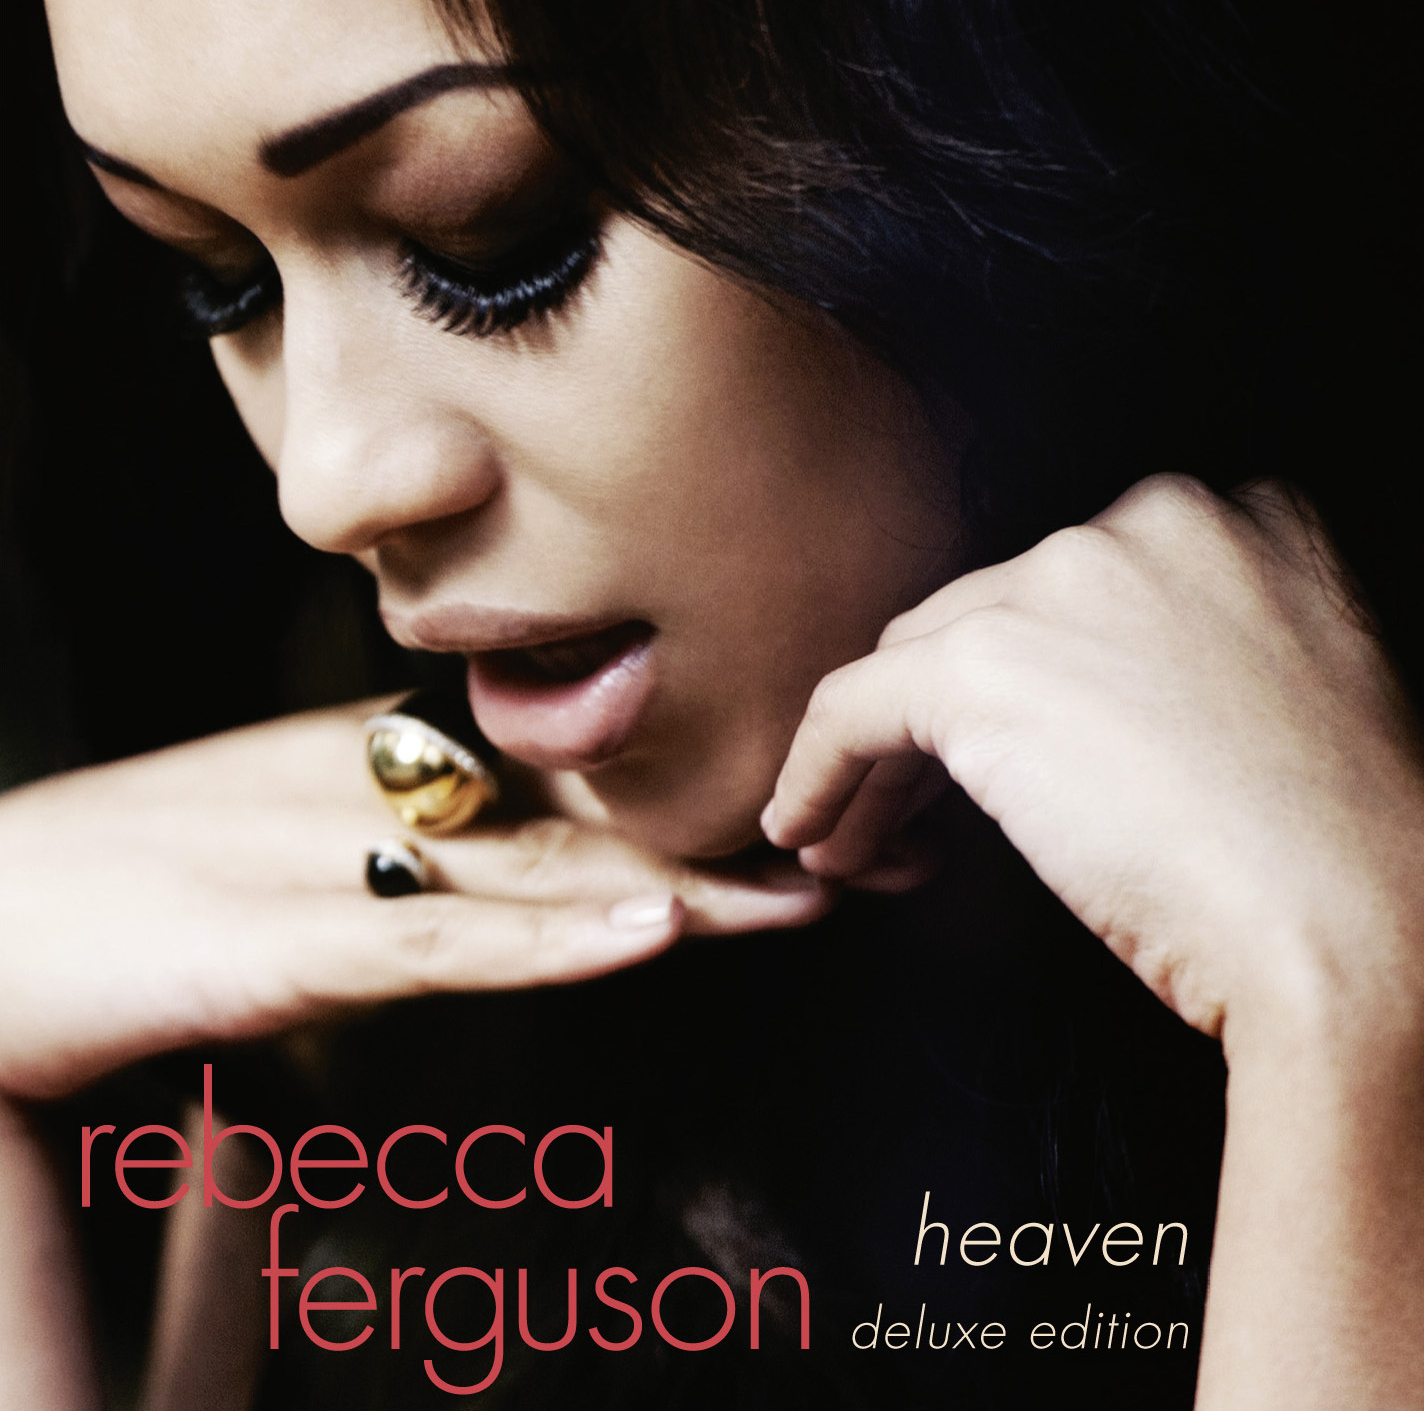 Cover art for the deluxe edition of Rebecca Ferguson's Heaven